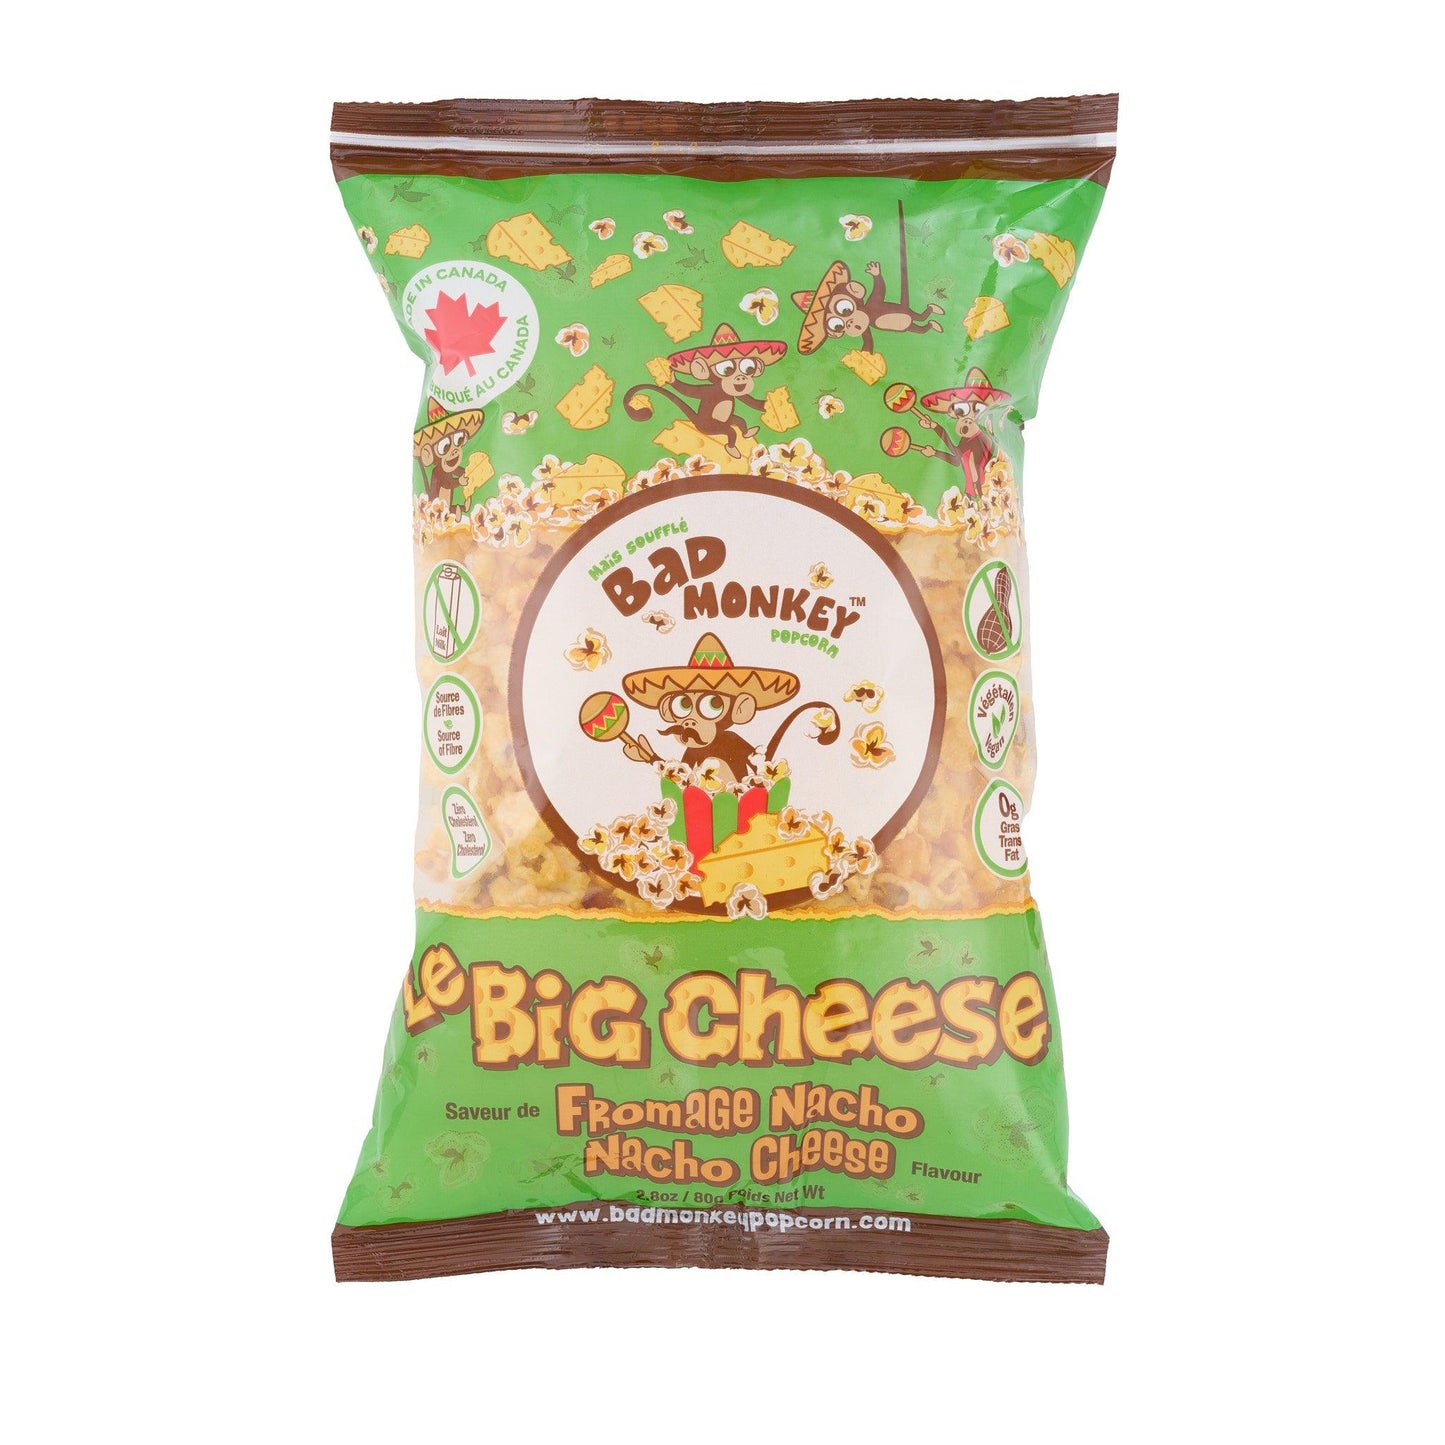 Big Cheese Popcorn - The Salty Box